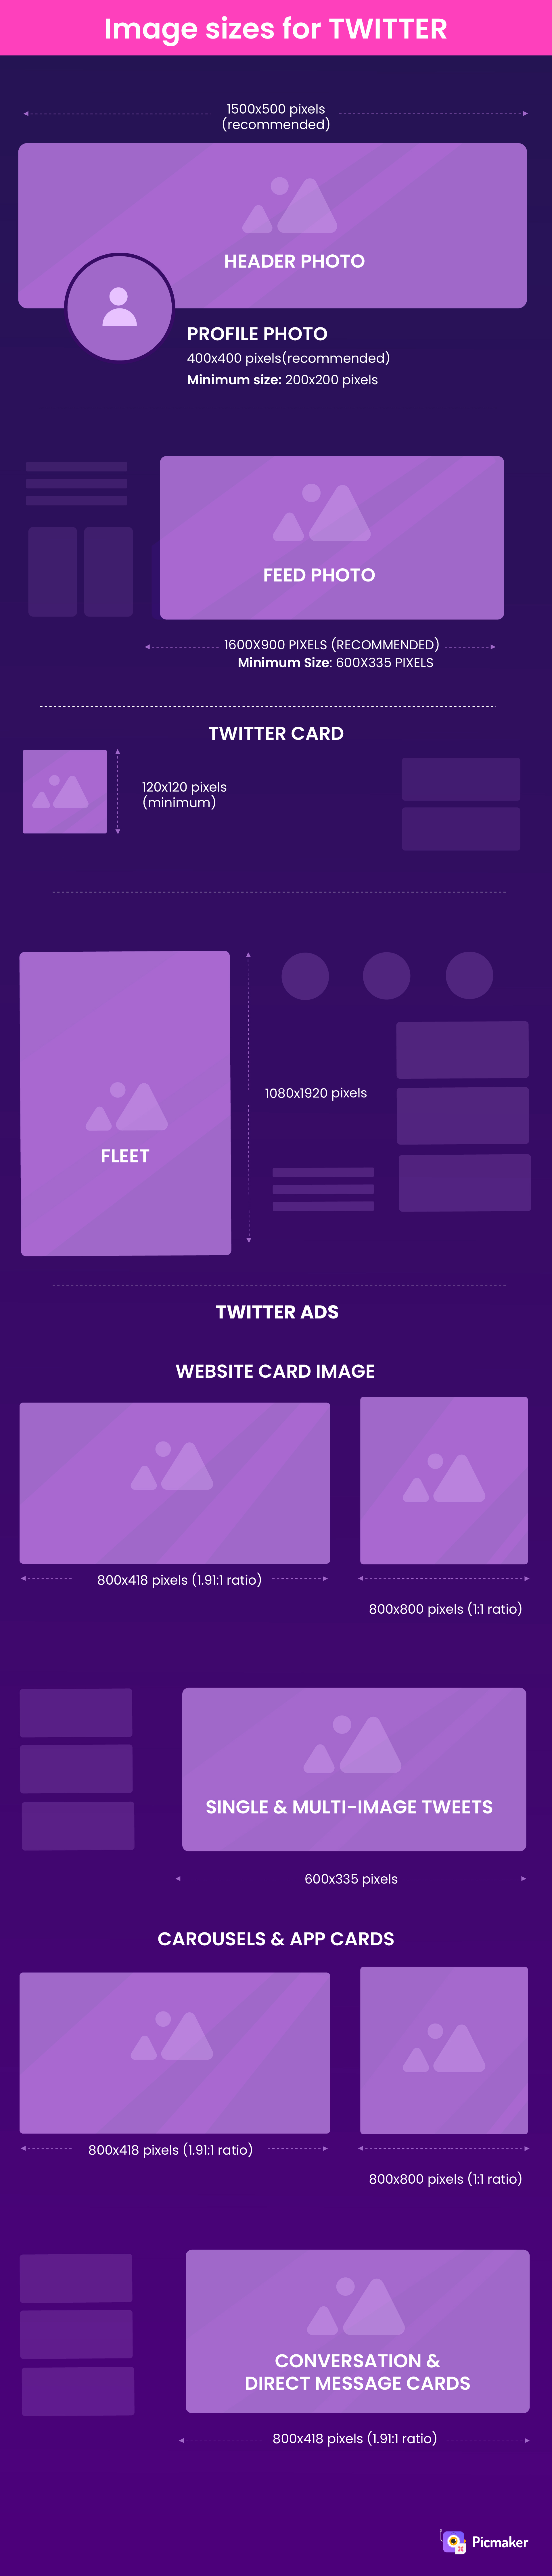 Twitter image sizes infographic